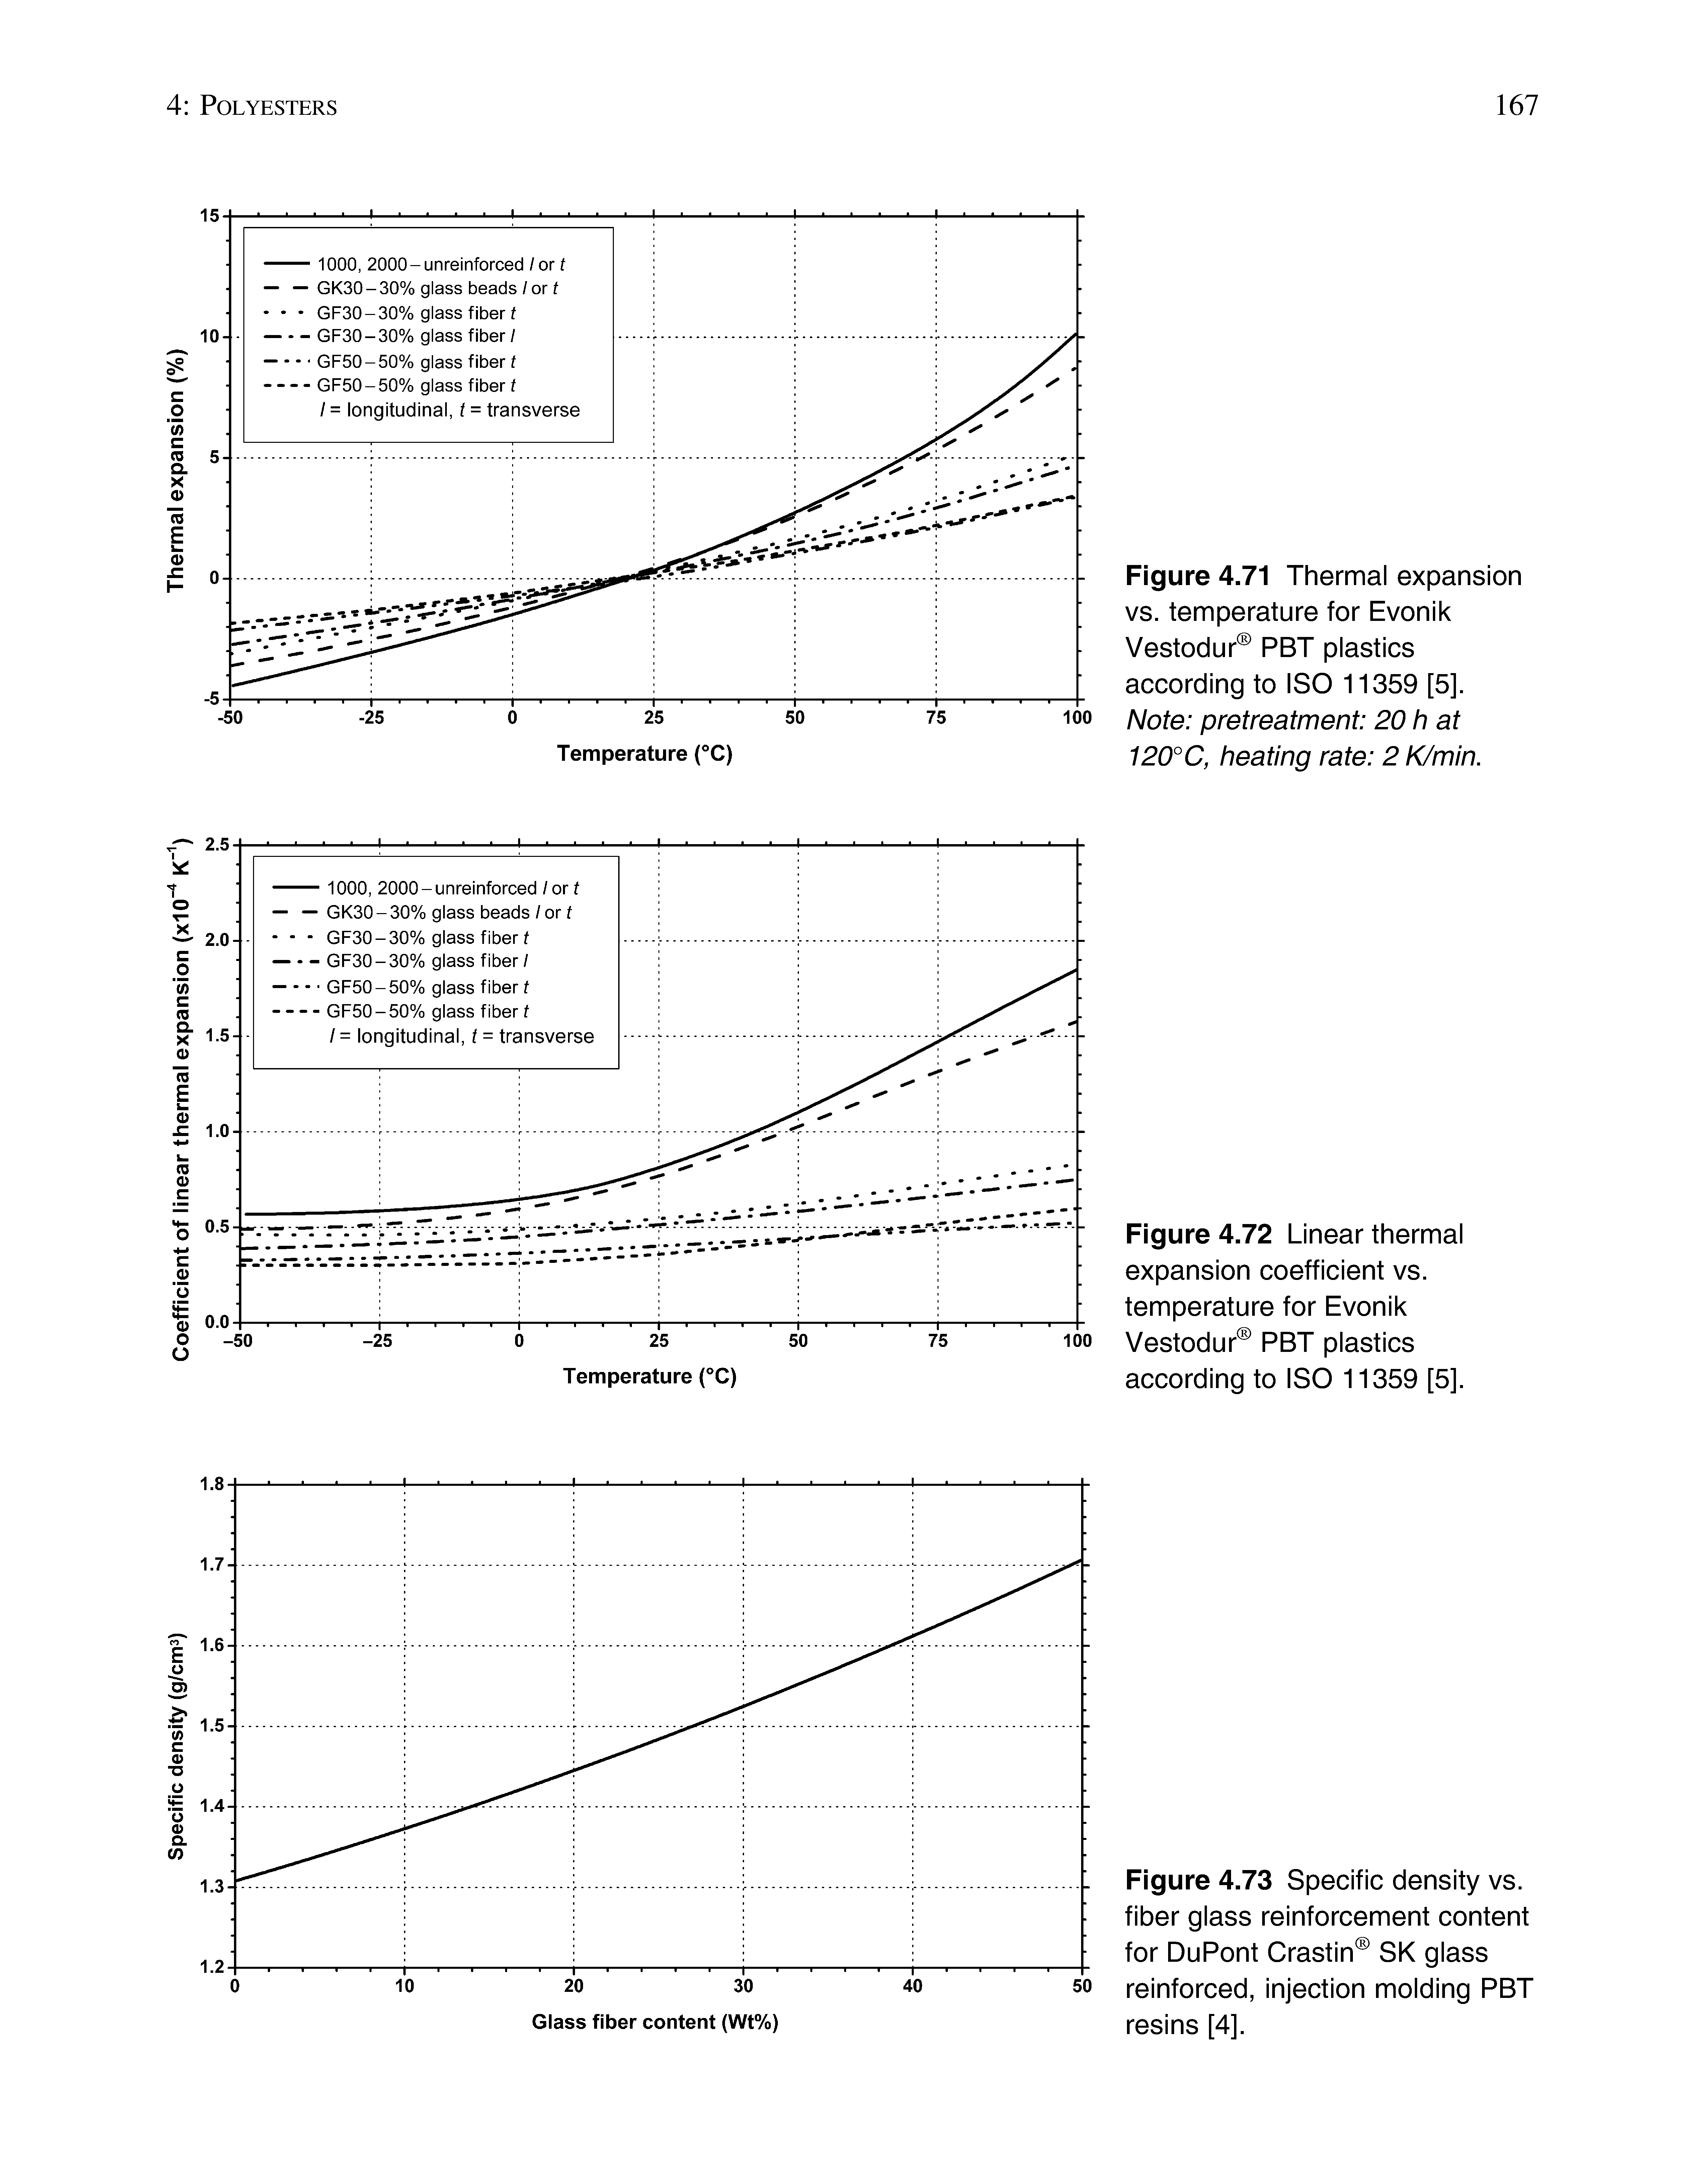 Figure 4.71 Thermal expansion vs. temperature for Evonik Vestodur PBT plastics according to ISO 11359 [5], Note pretreatment 20 h at 120°C, heating rate 2 K/min.